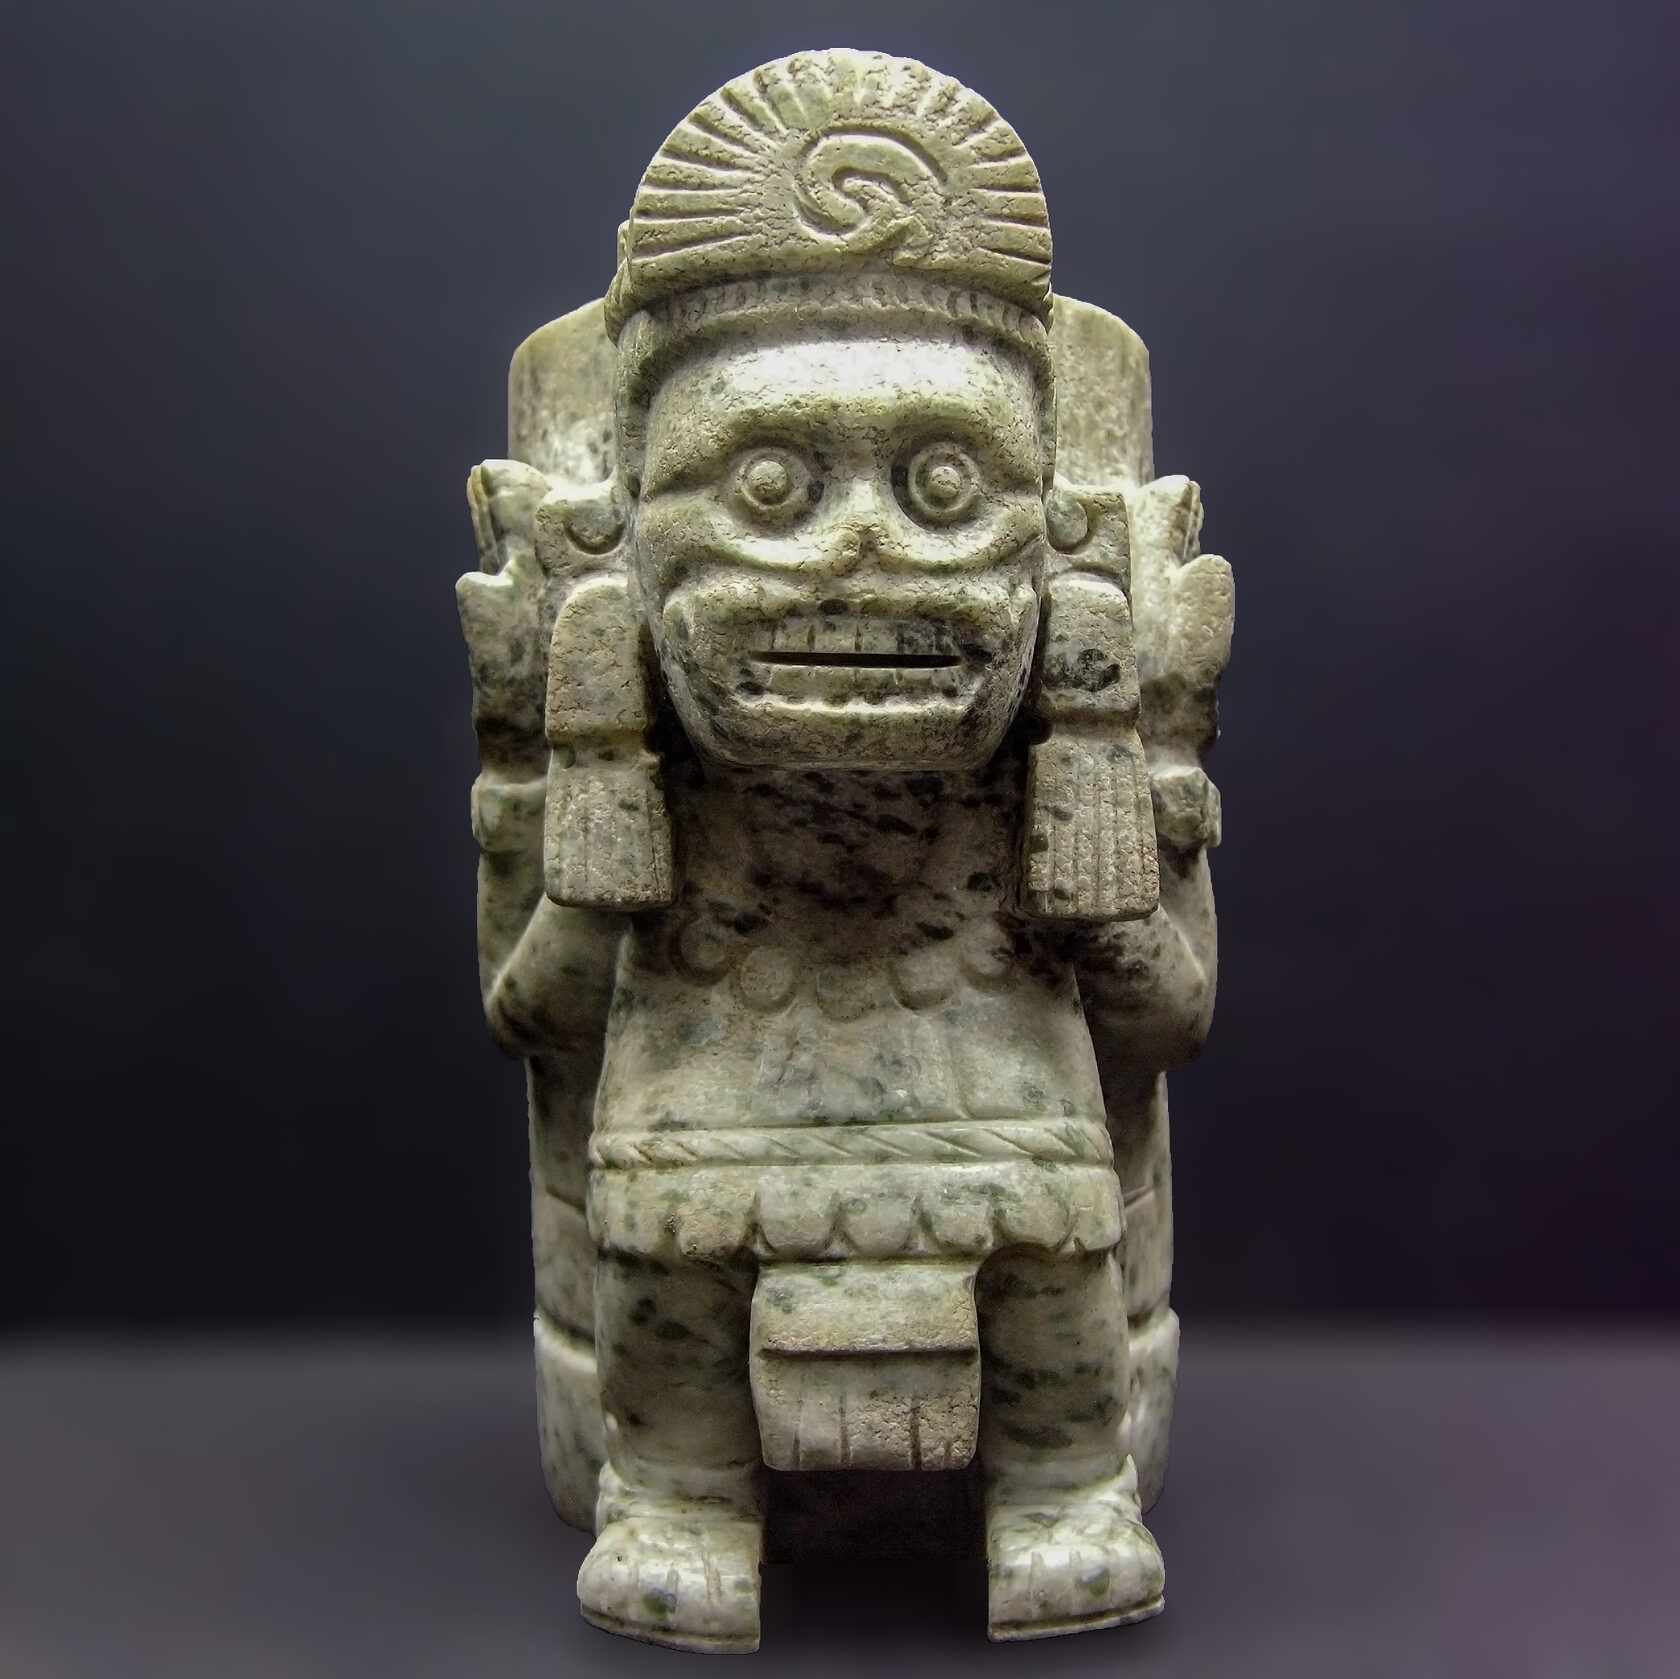 Миктлантекутли. Ацтеки, примерно 1500 гг. н.э. Коллекция Museo del Templo Mayor, Mexico.